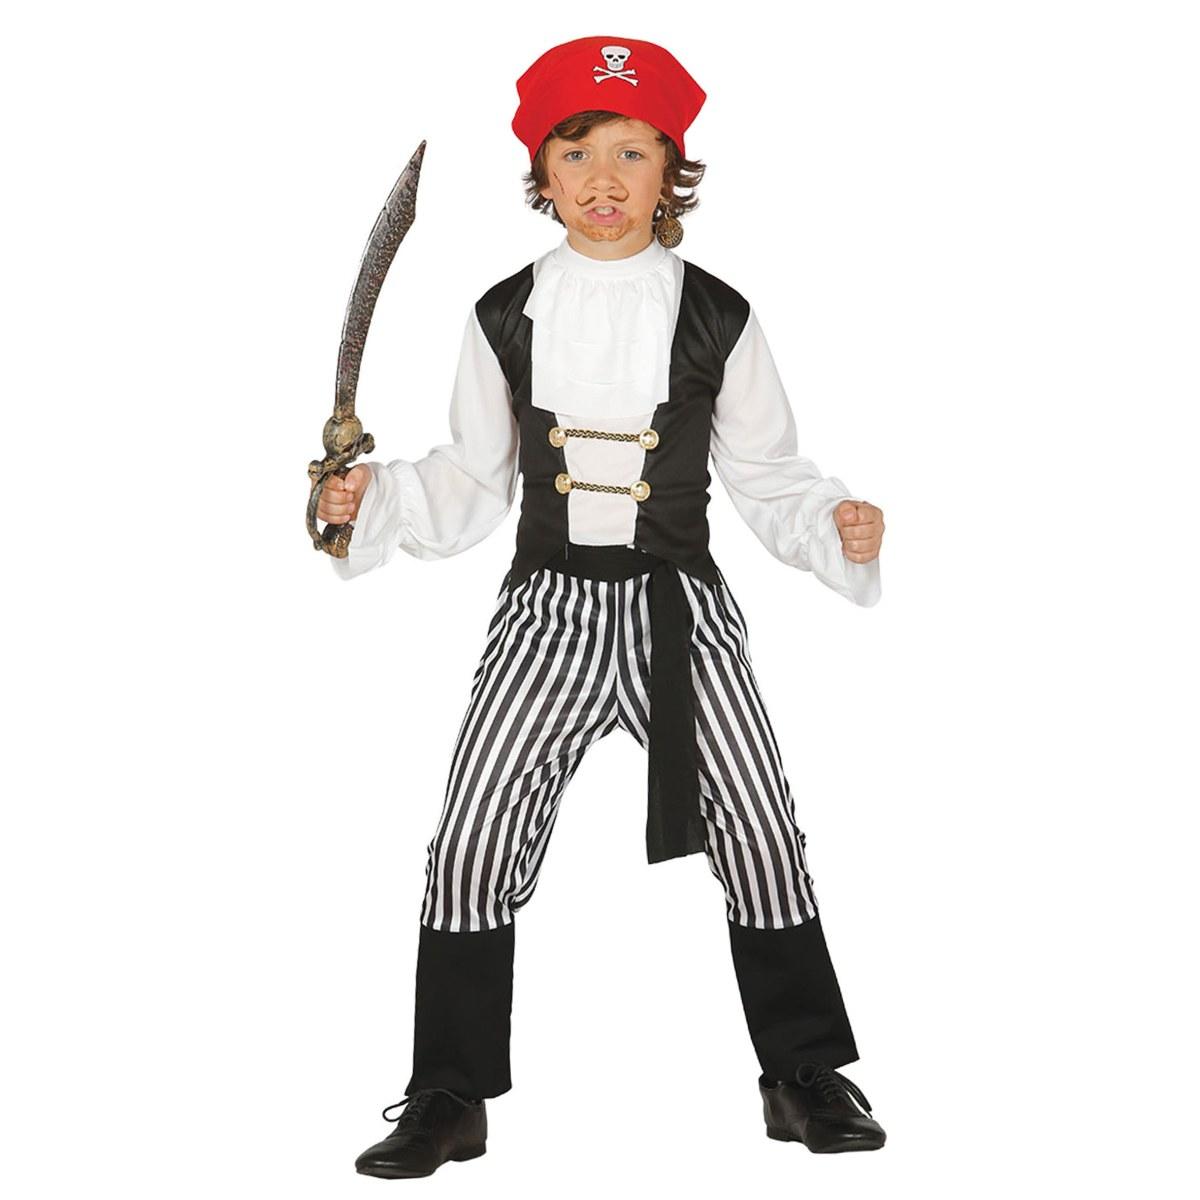 Costume Pirata Bucaniere Bambino